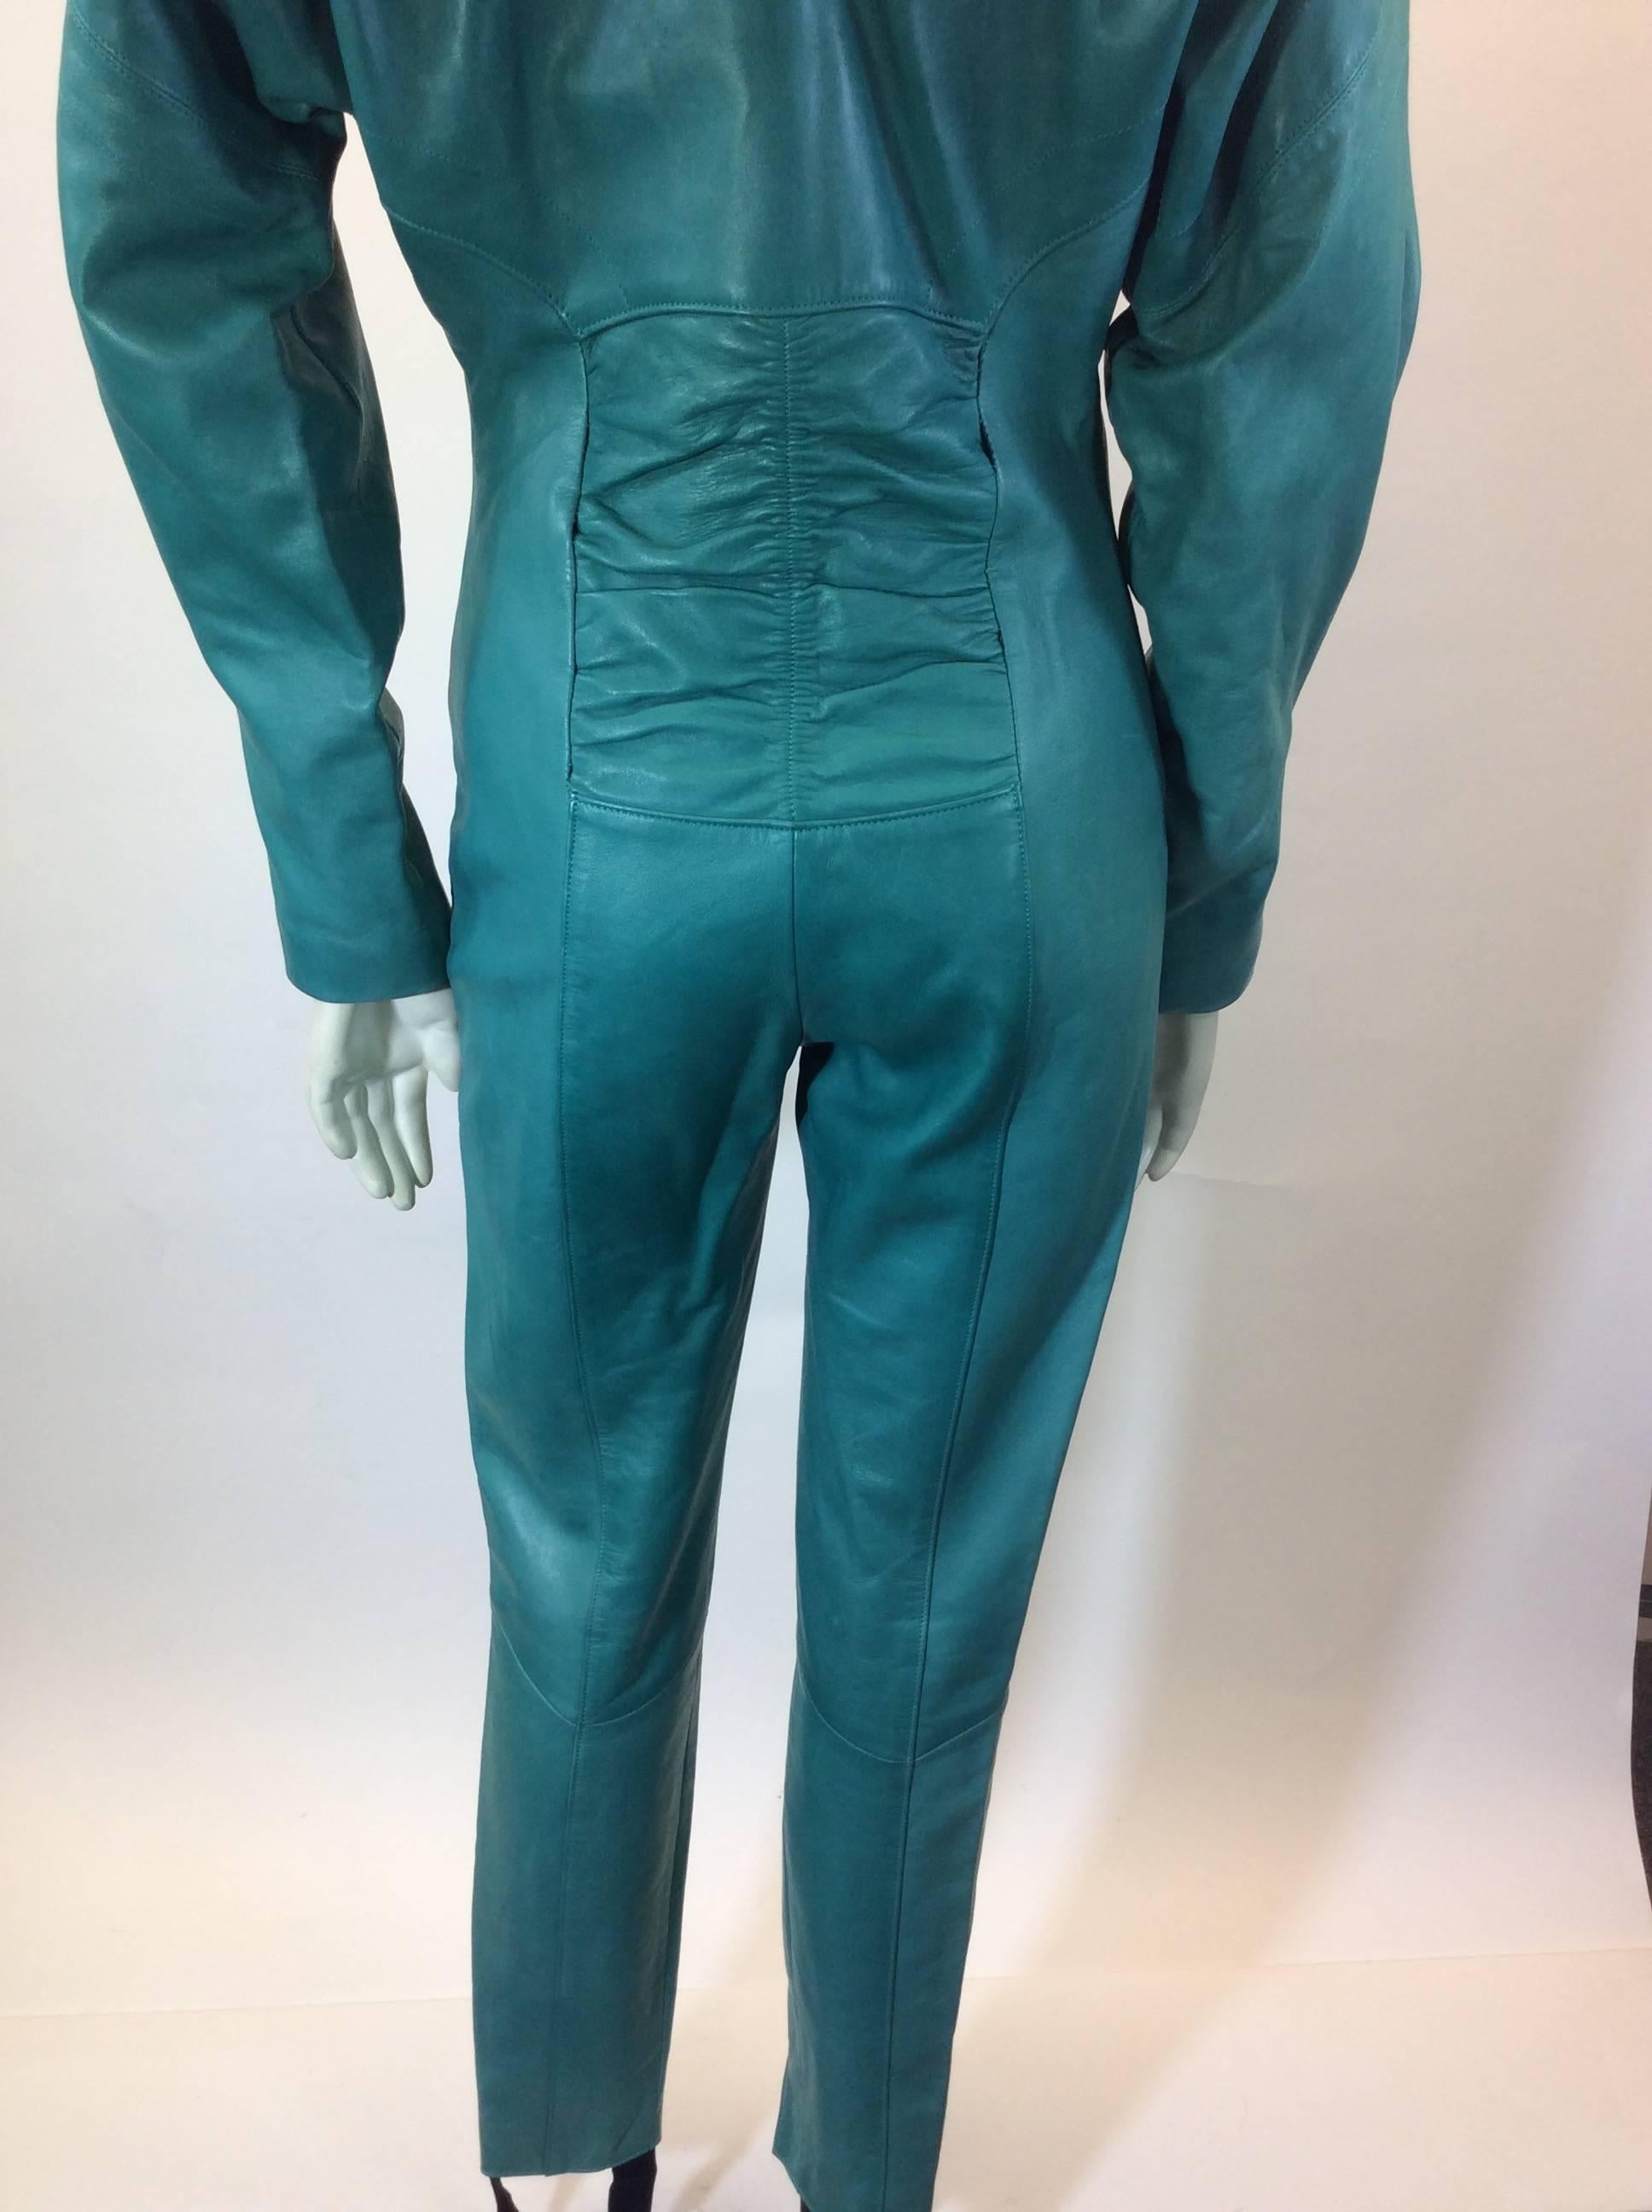 Blue Jean Claude Jitrois Teal Vintage Leather Full Body Jumpsuit For Sale